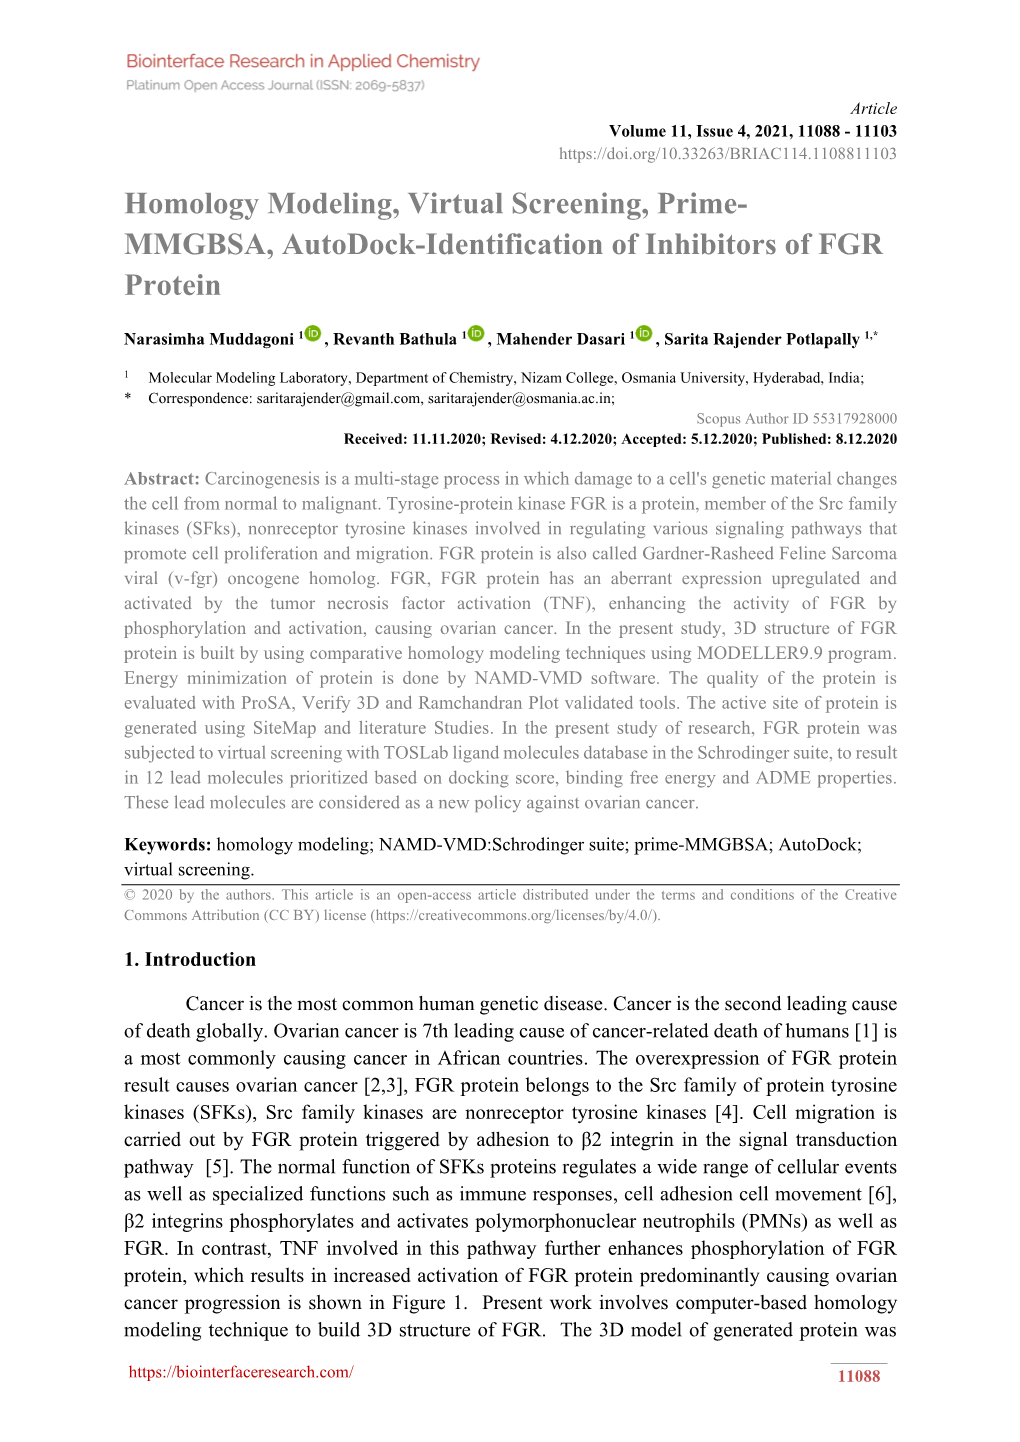 Homology Modeling, Virtual Screening, Prime- MMGBSA, Autodock-Identification of Inhibitors of FGR Protein